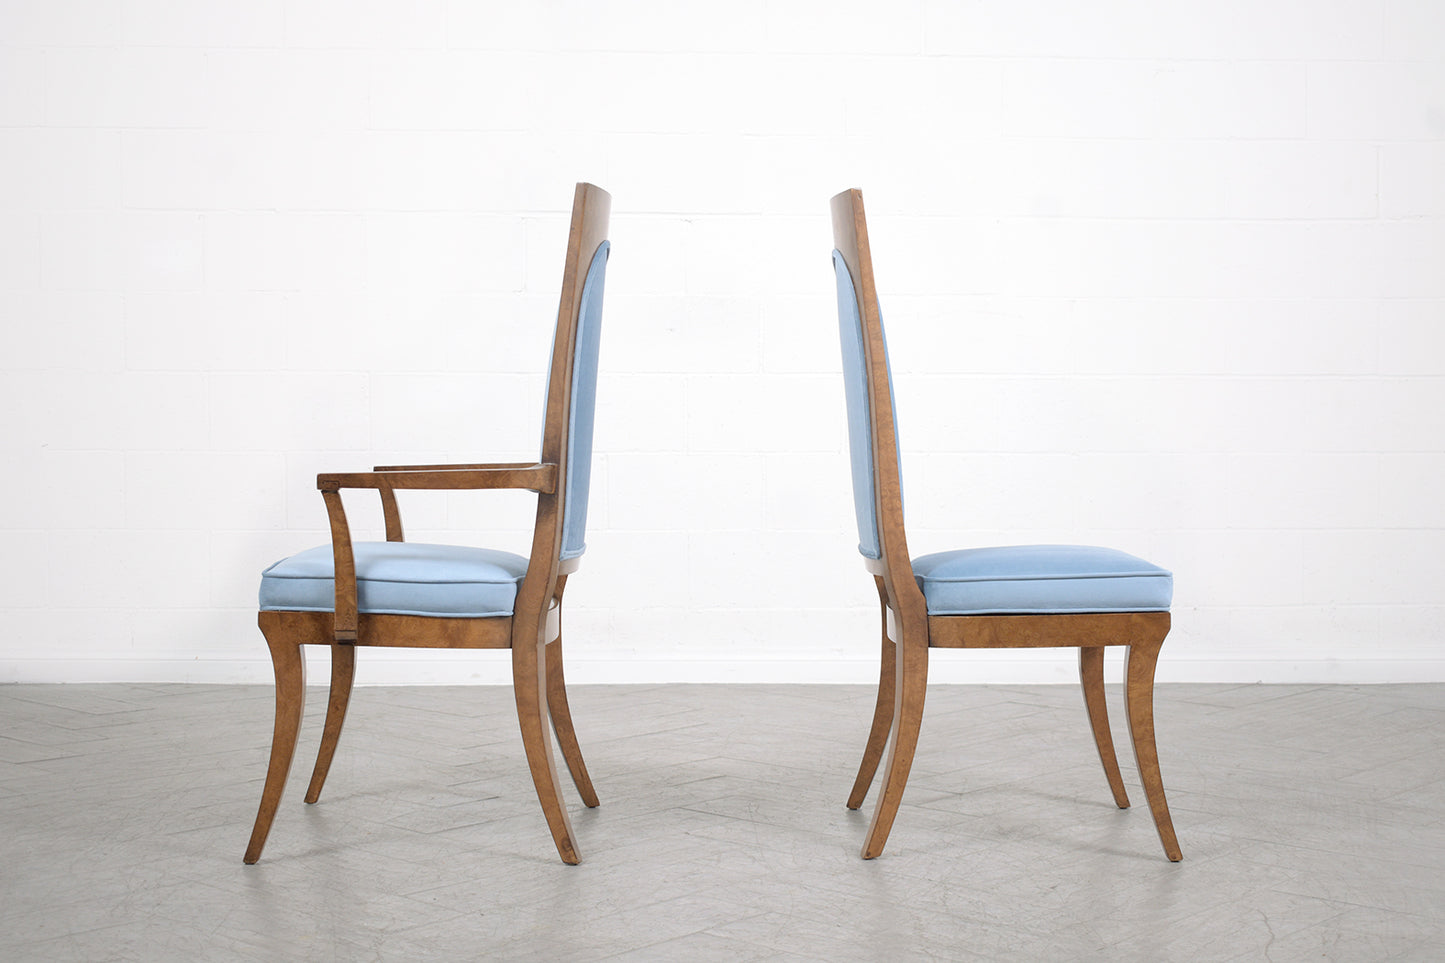 Elegant Set of Mid-Century Modern Mastercraft Dining Chairs